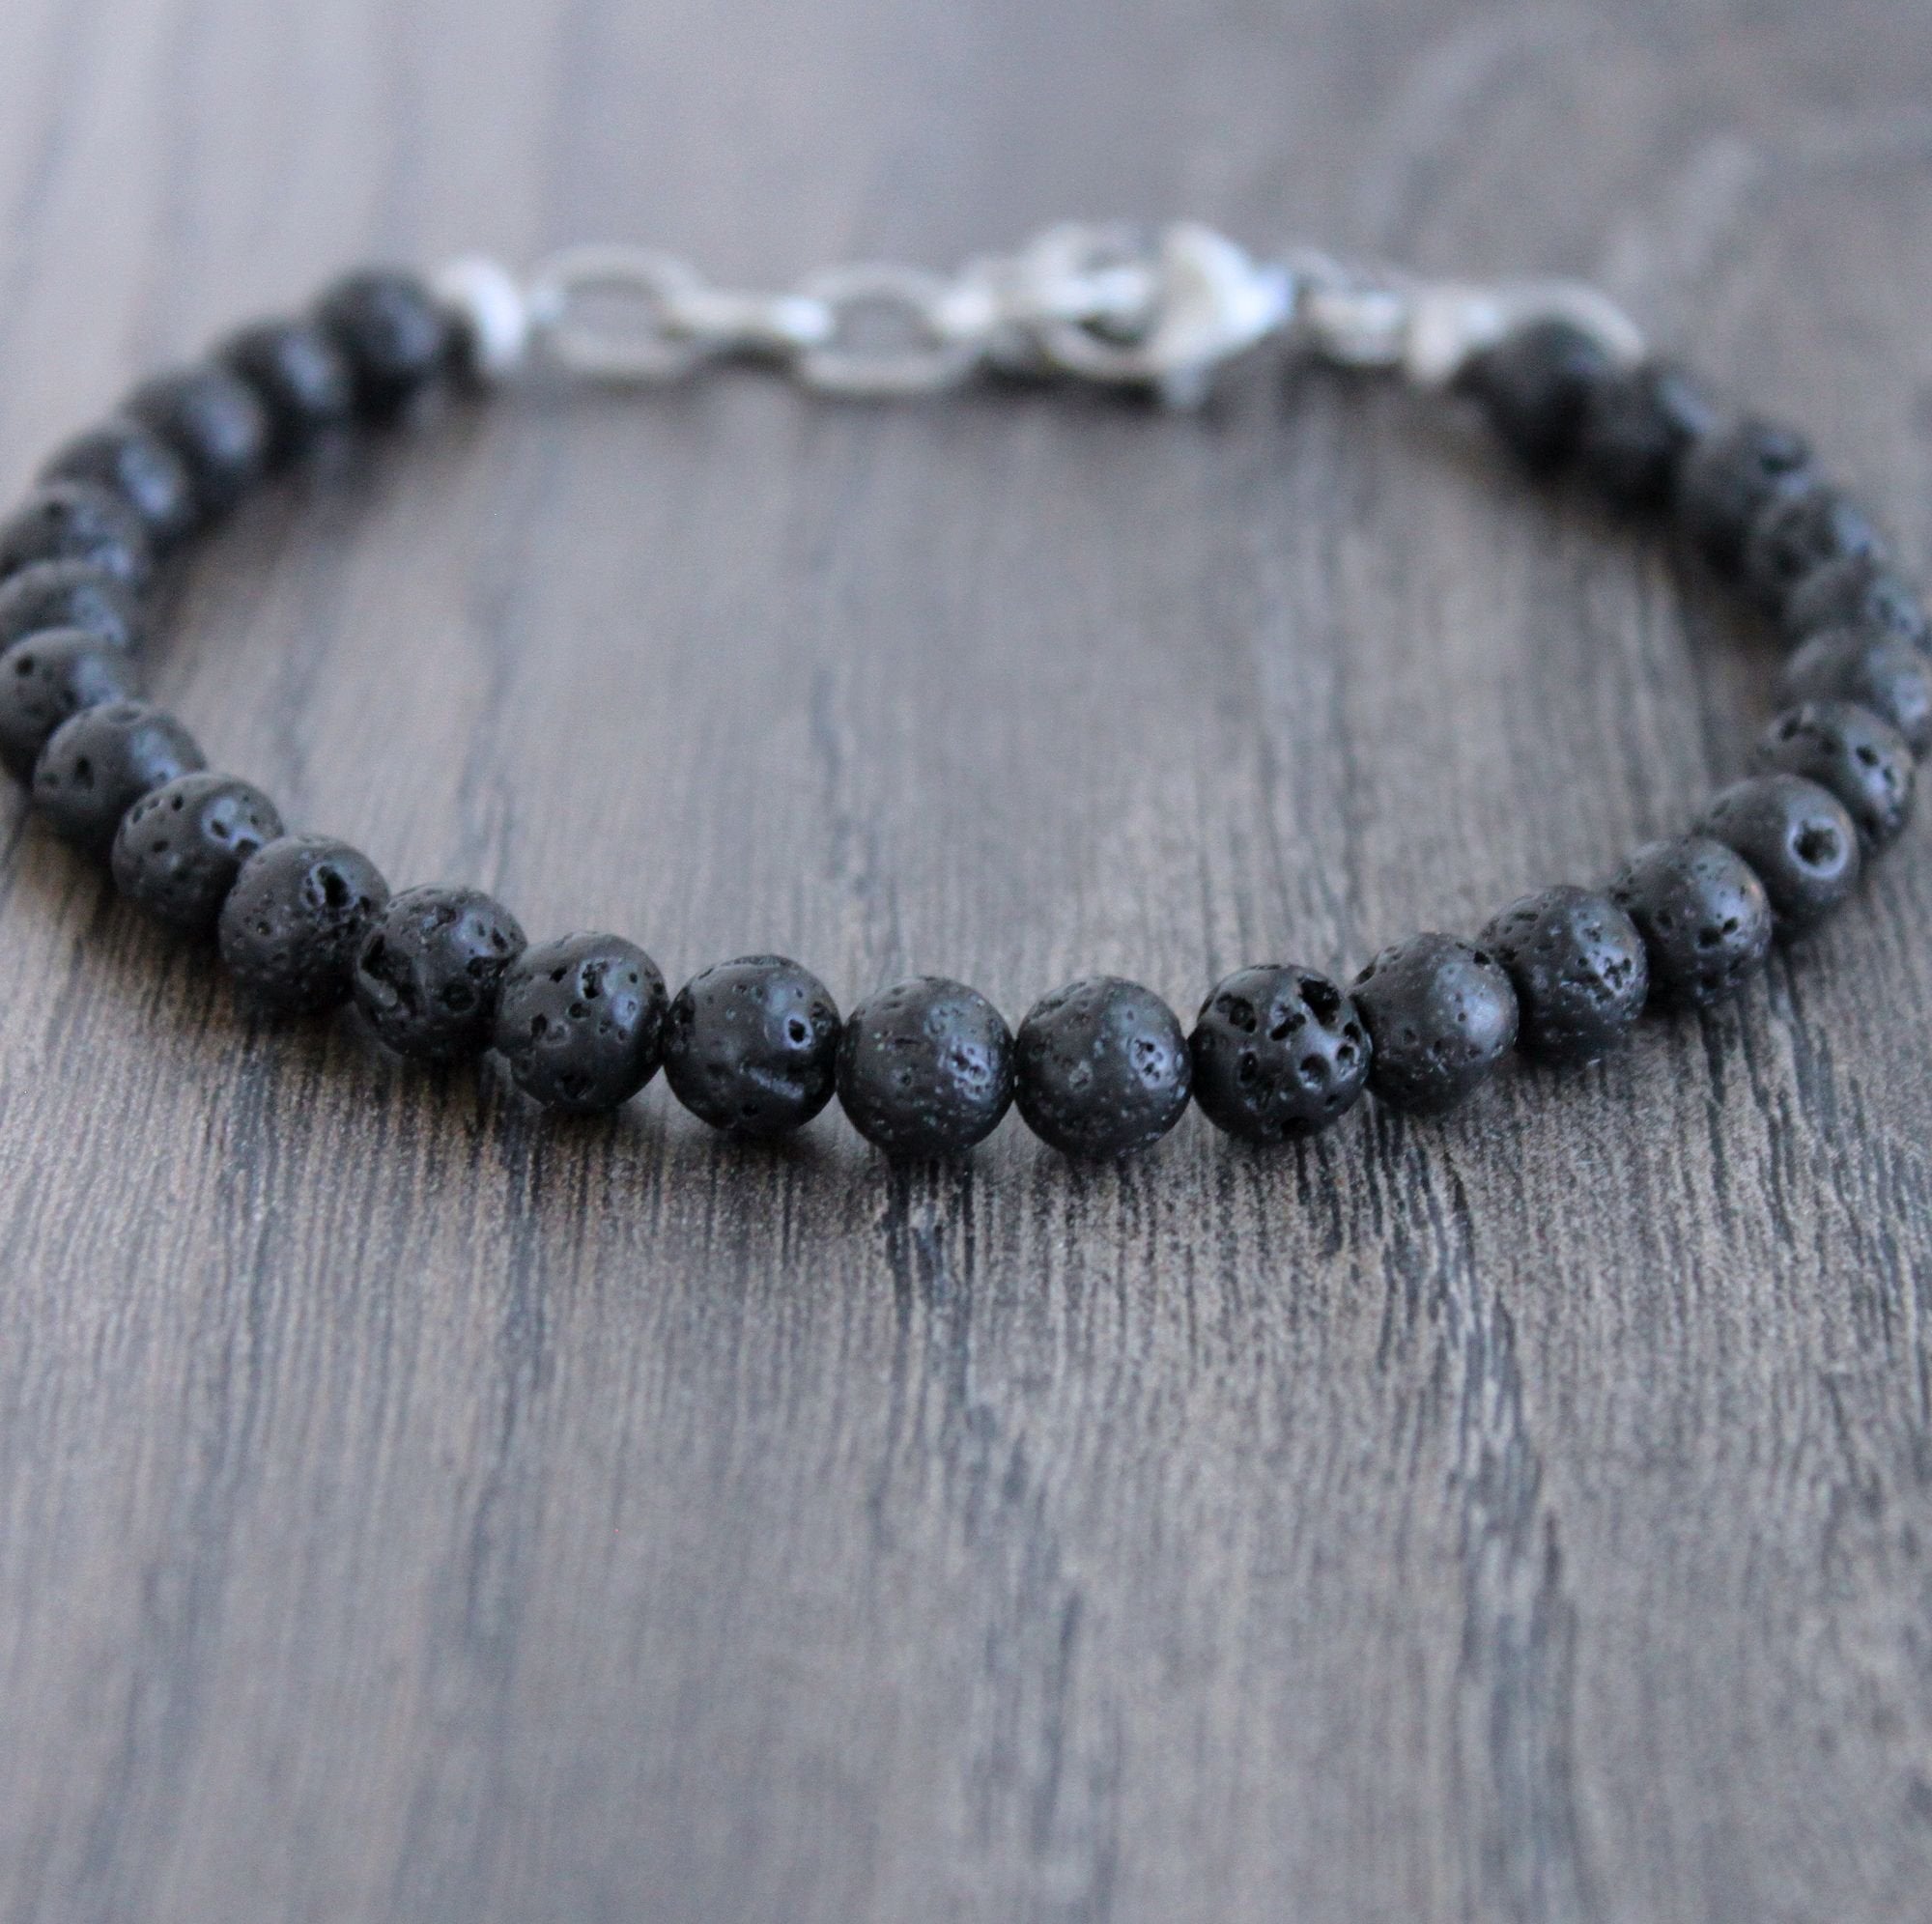 Bracelet for man with hematite and lava stones - JoyElly